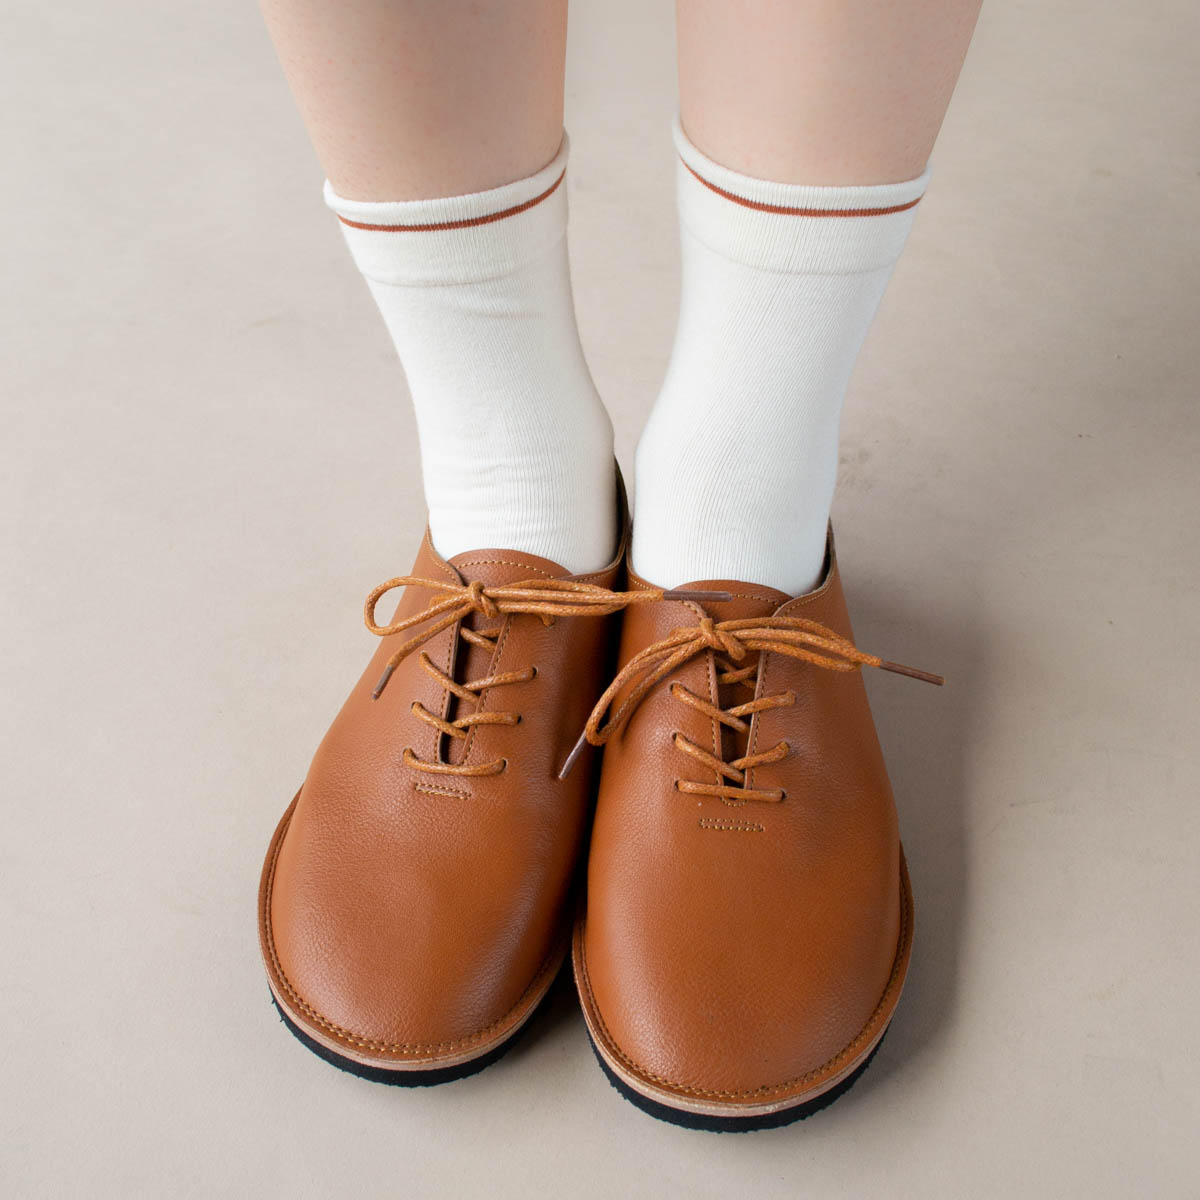 tiepology-a-line-casual-socks-03